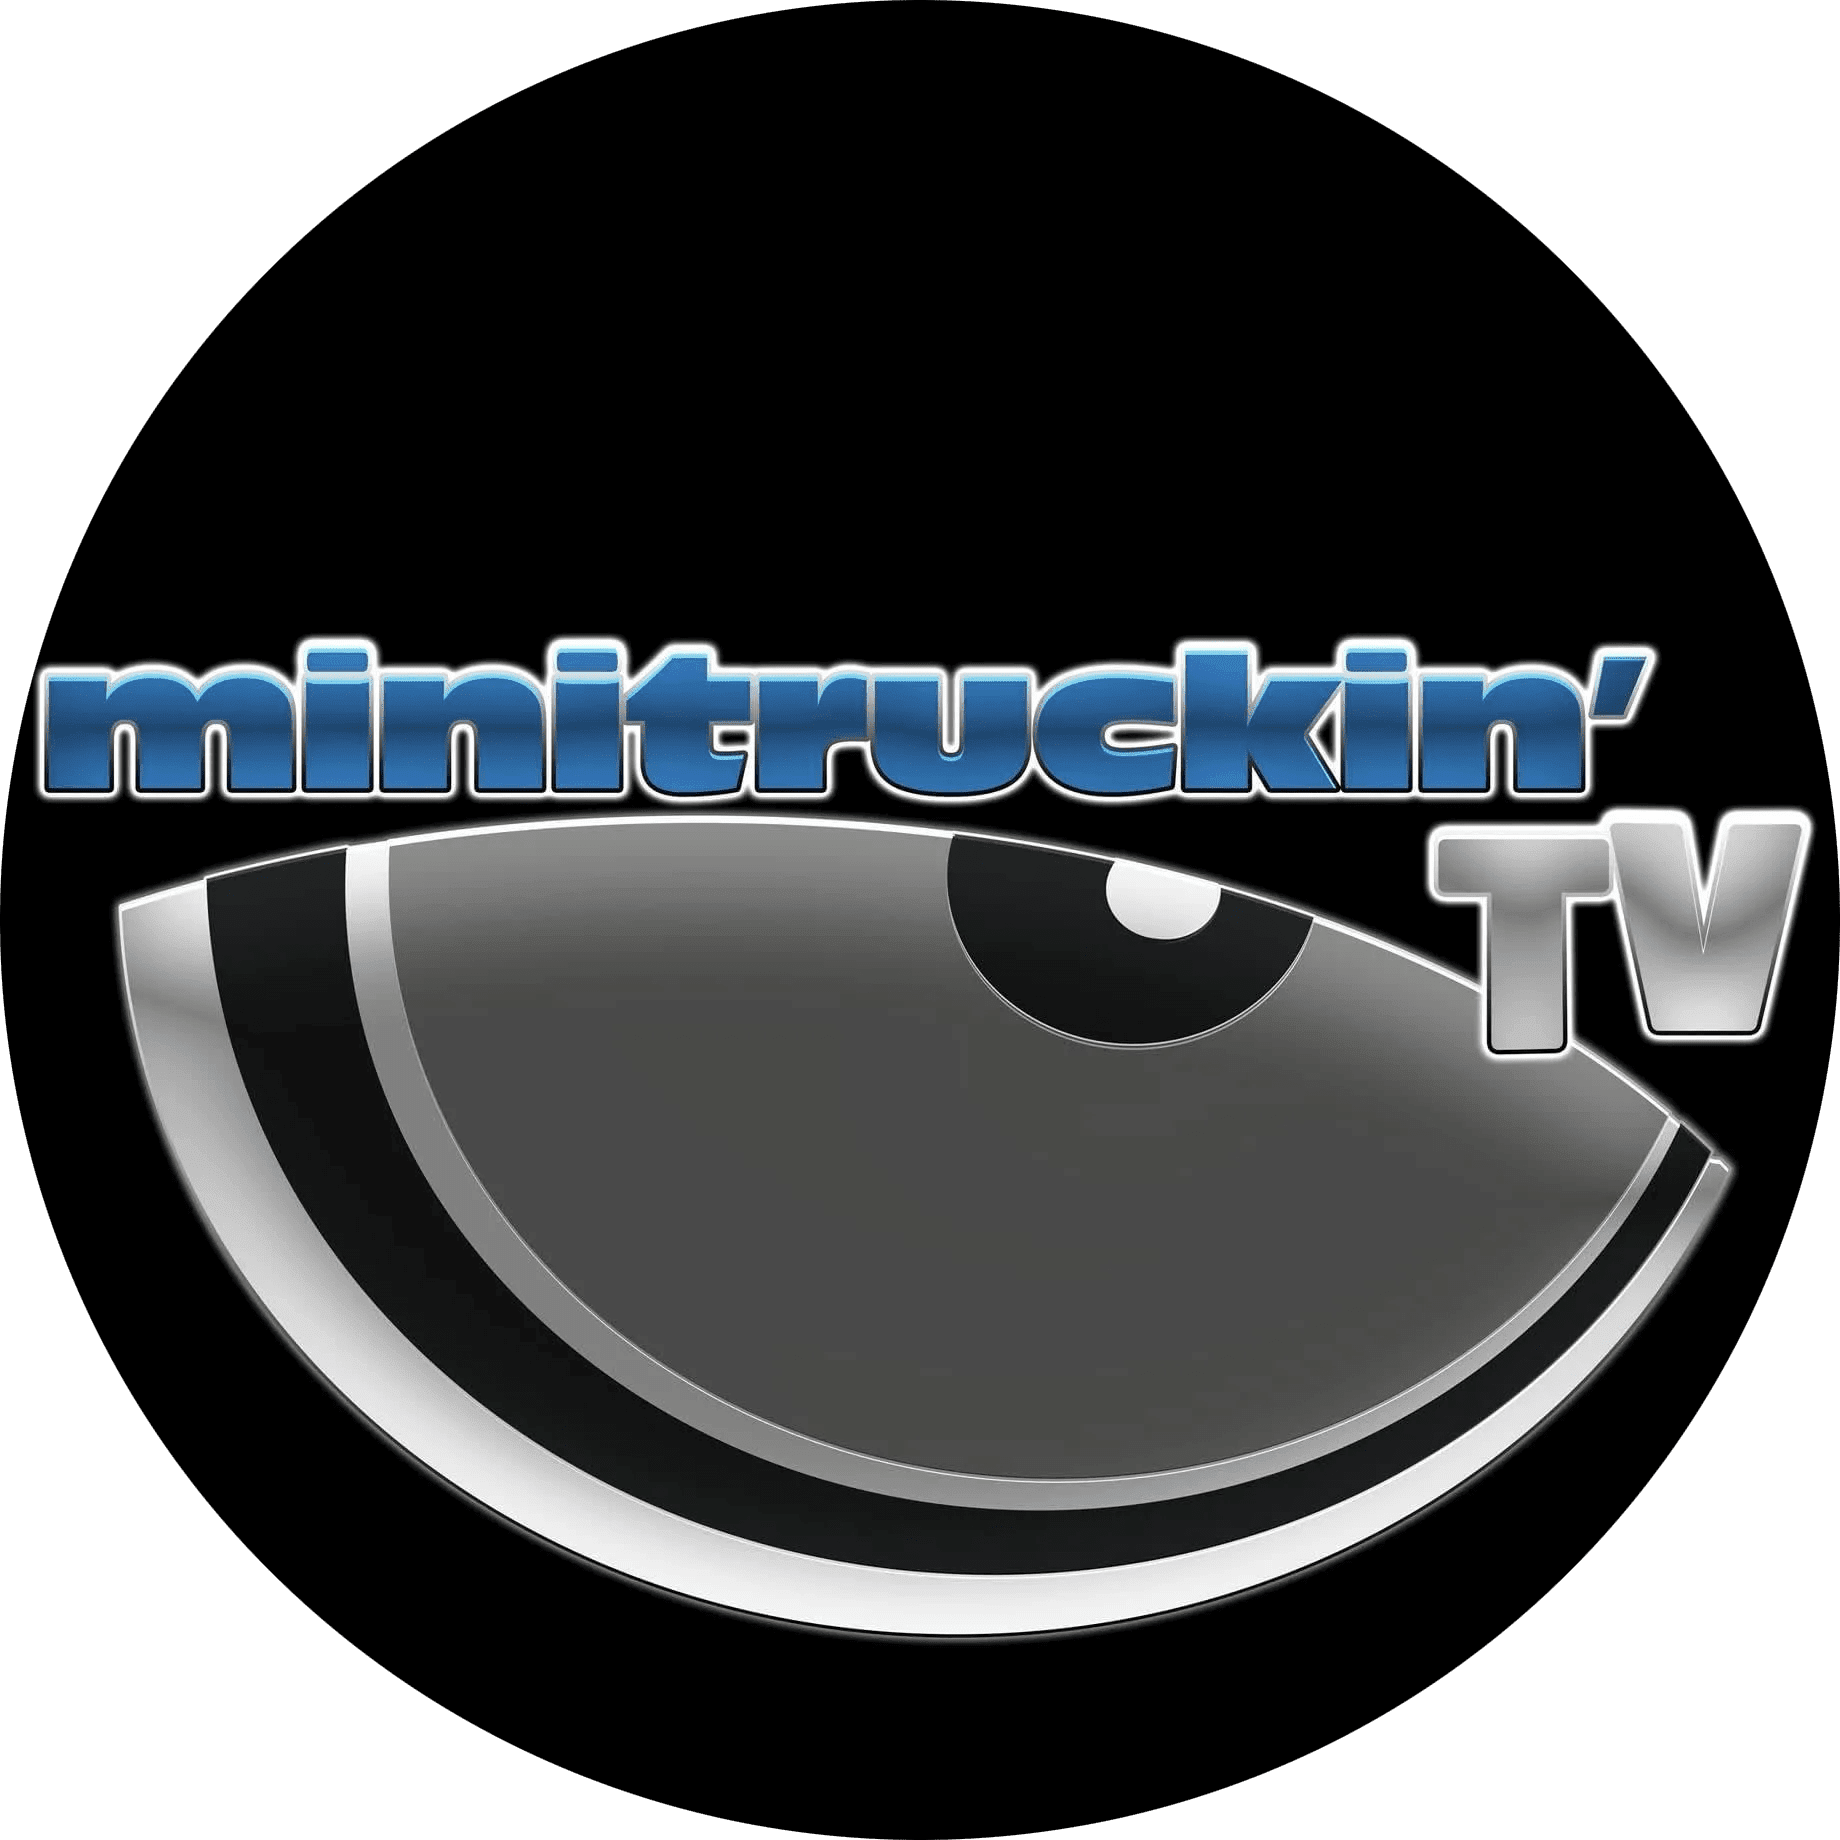 minitruckin’ TV